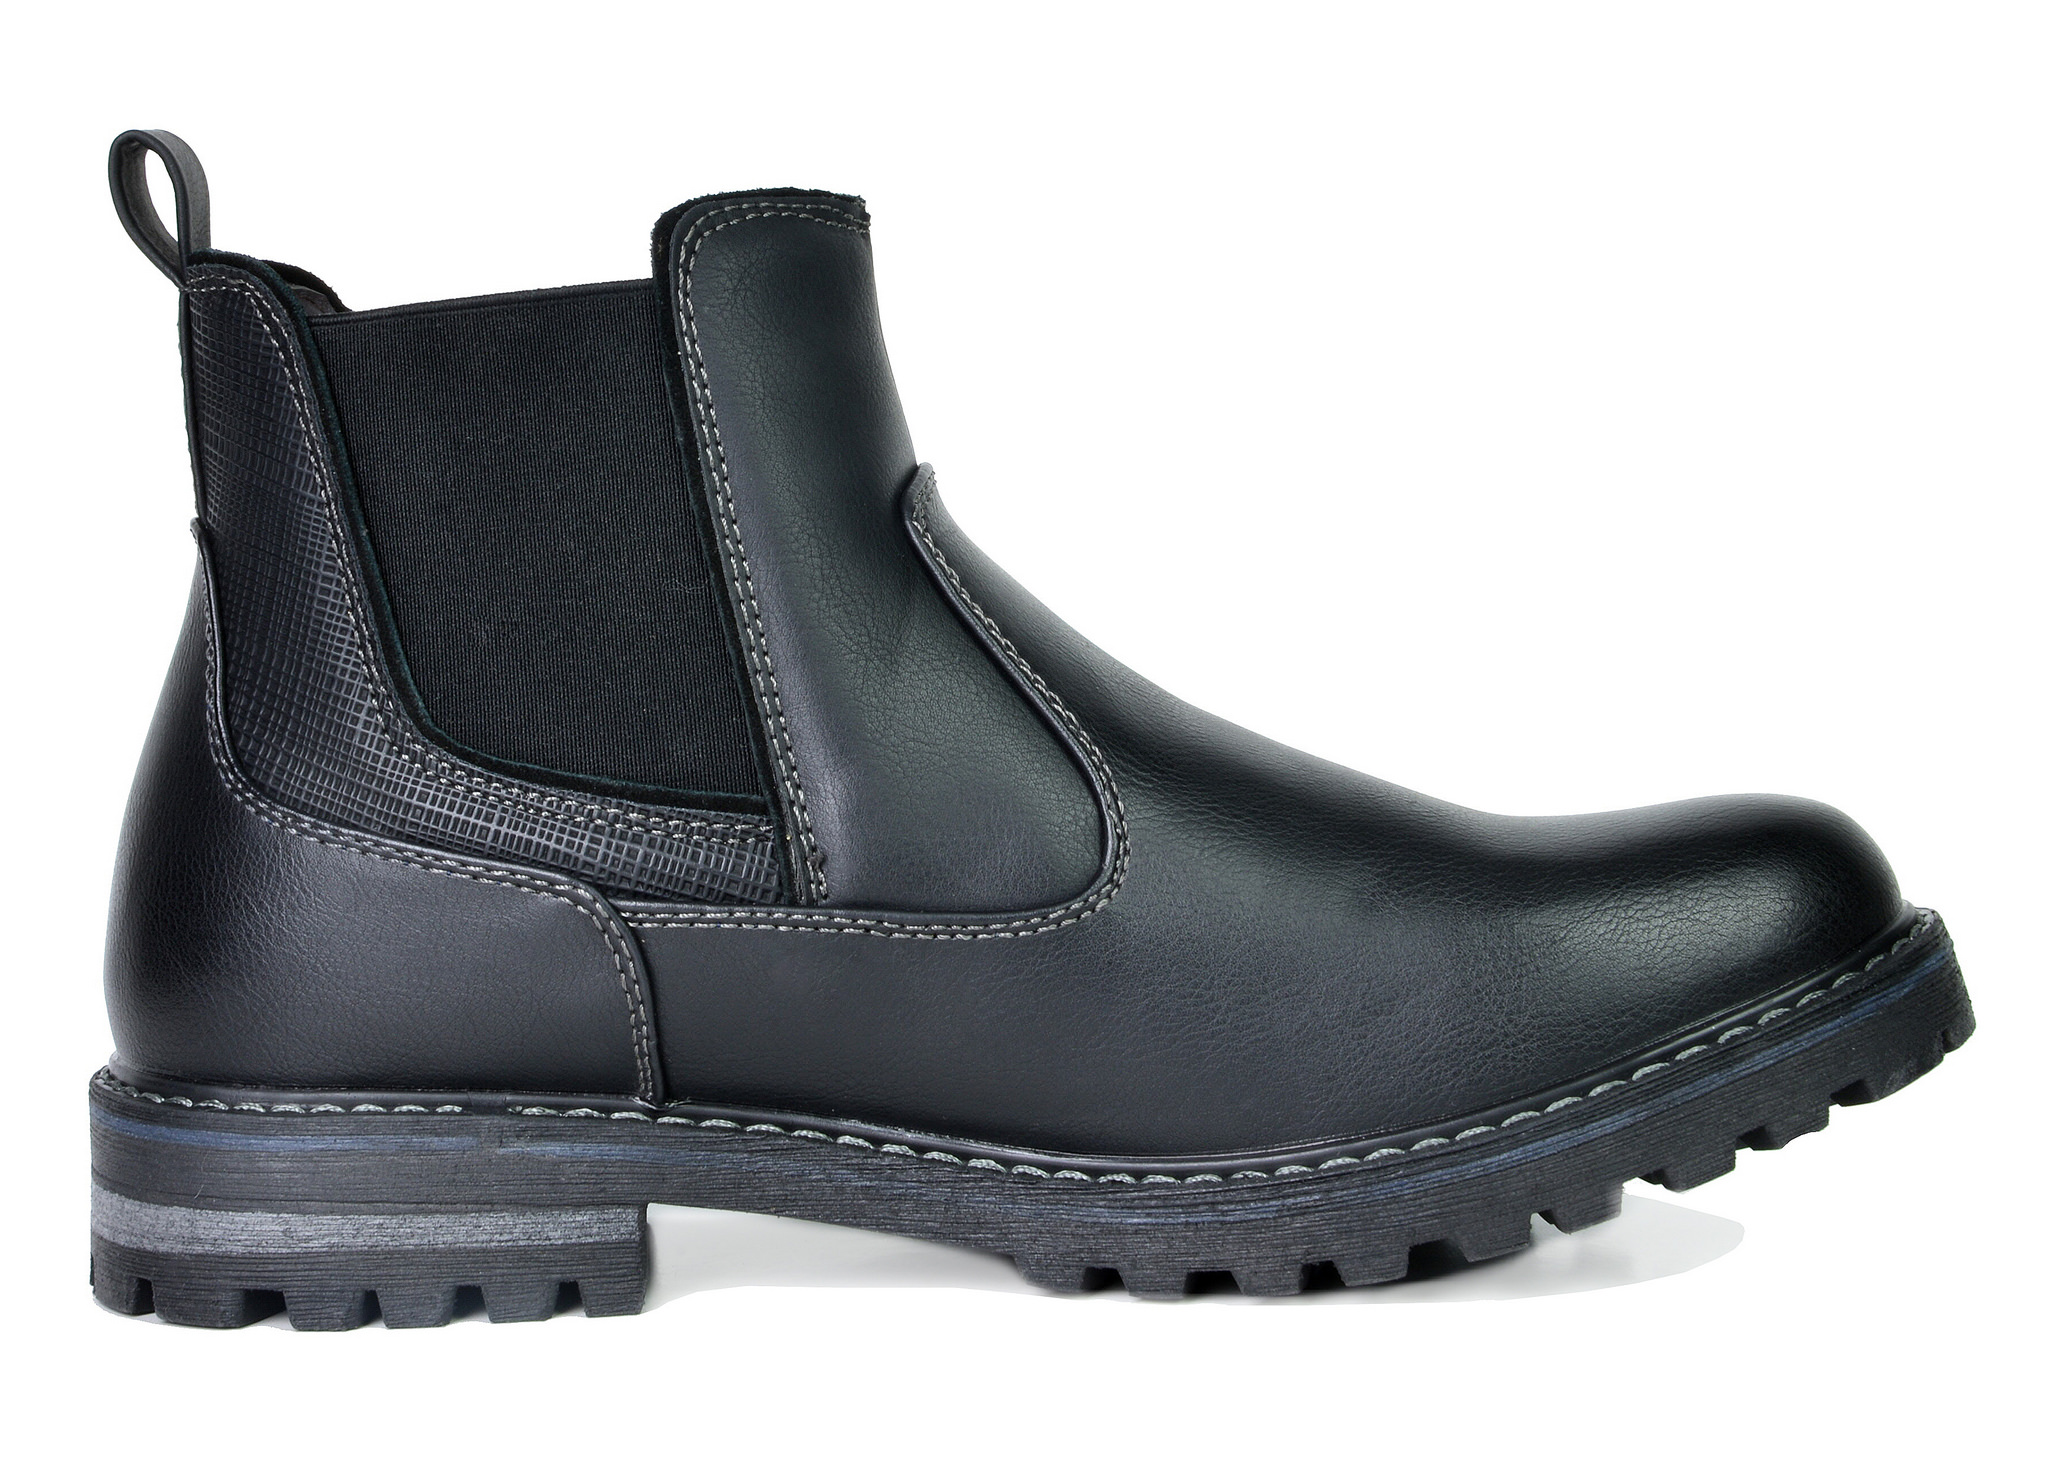 Bruno Marc Men Chelsea Ankle Boots Men's Casual Faux Leather Boots Shoes Plain Toe Slip On Desert Boots ENGLE-03 BLACK Size 8.5 - image 2 of 5